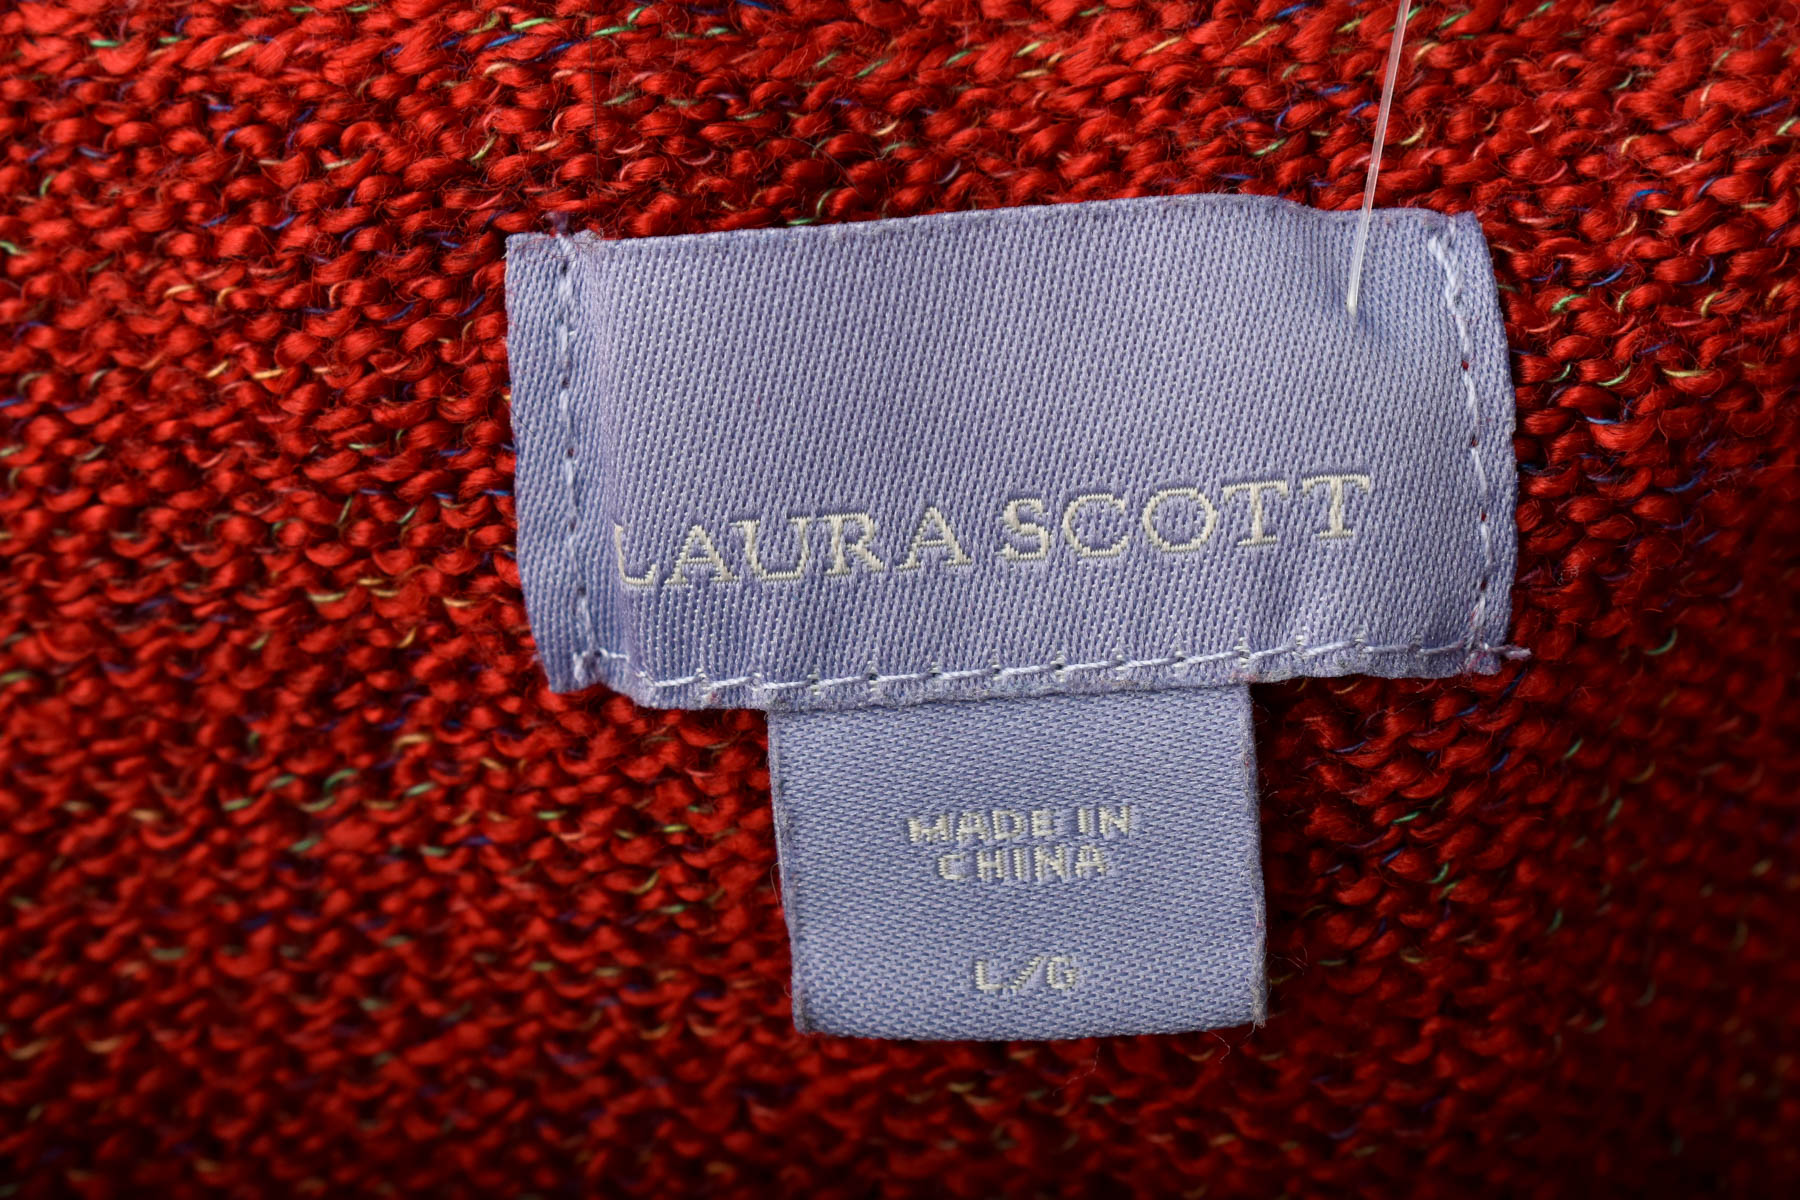 Pulover de damă - Laura Scott - 2